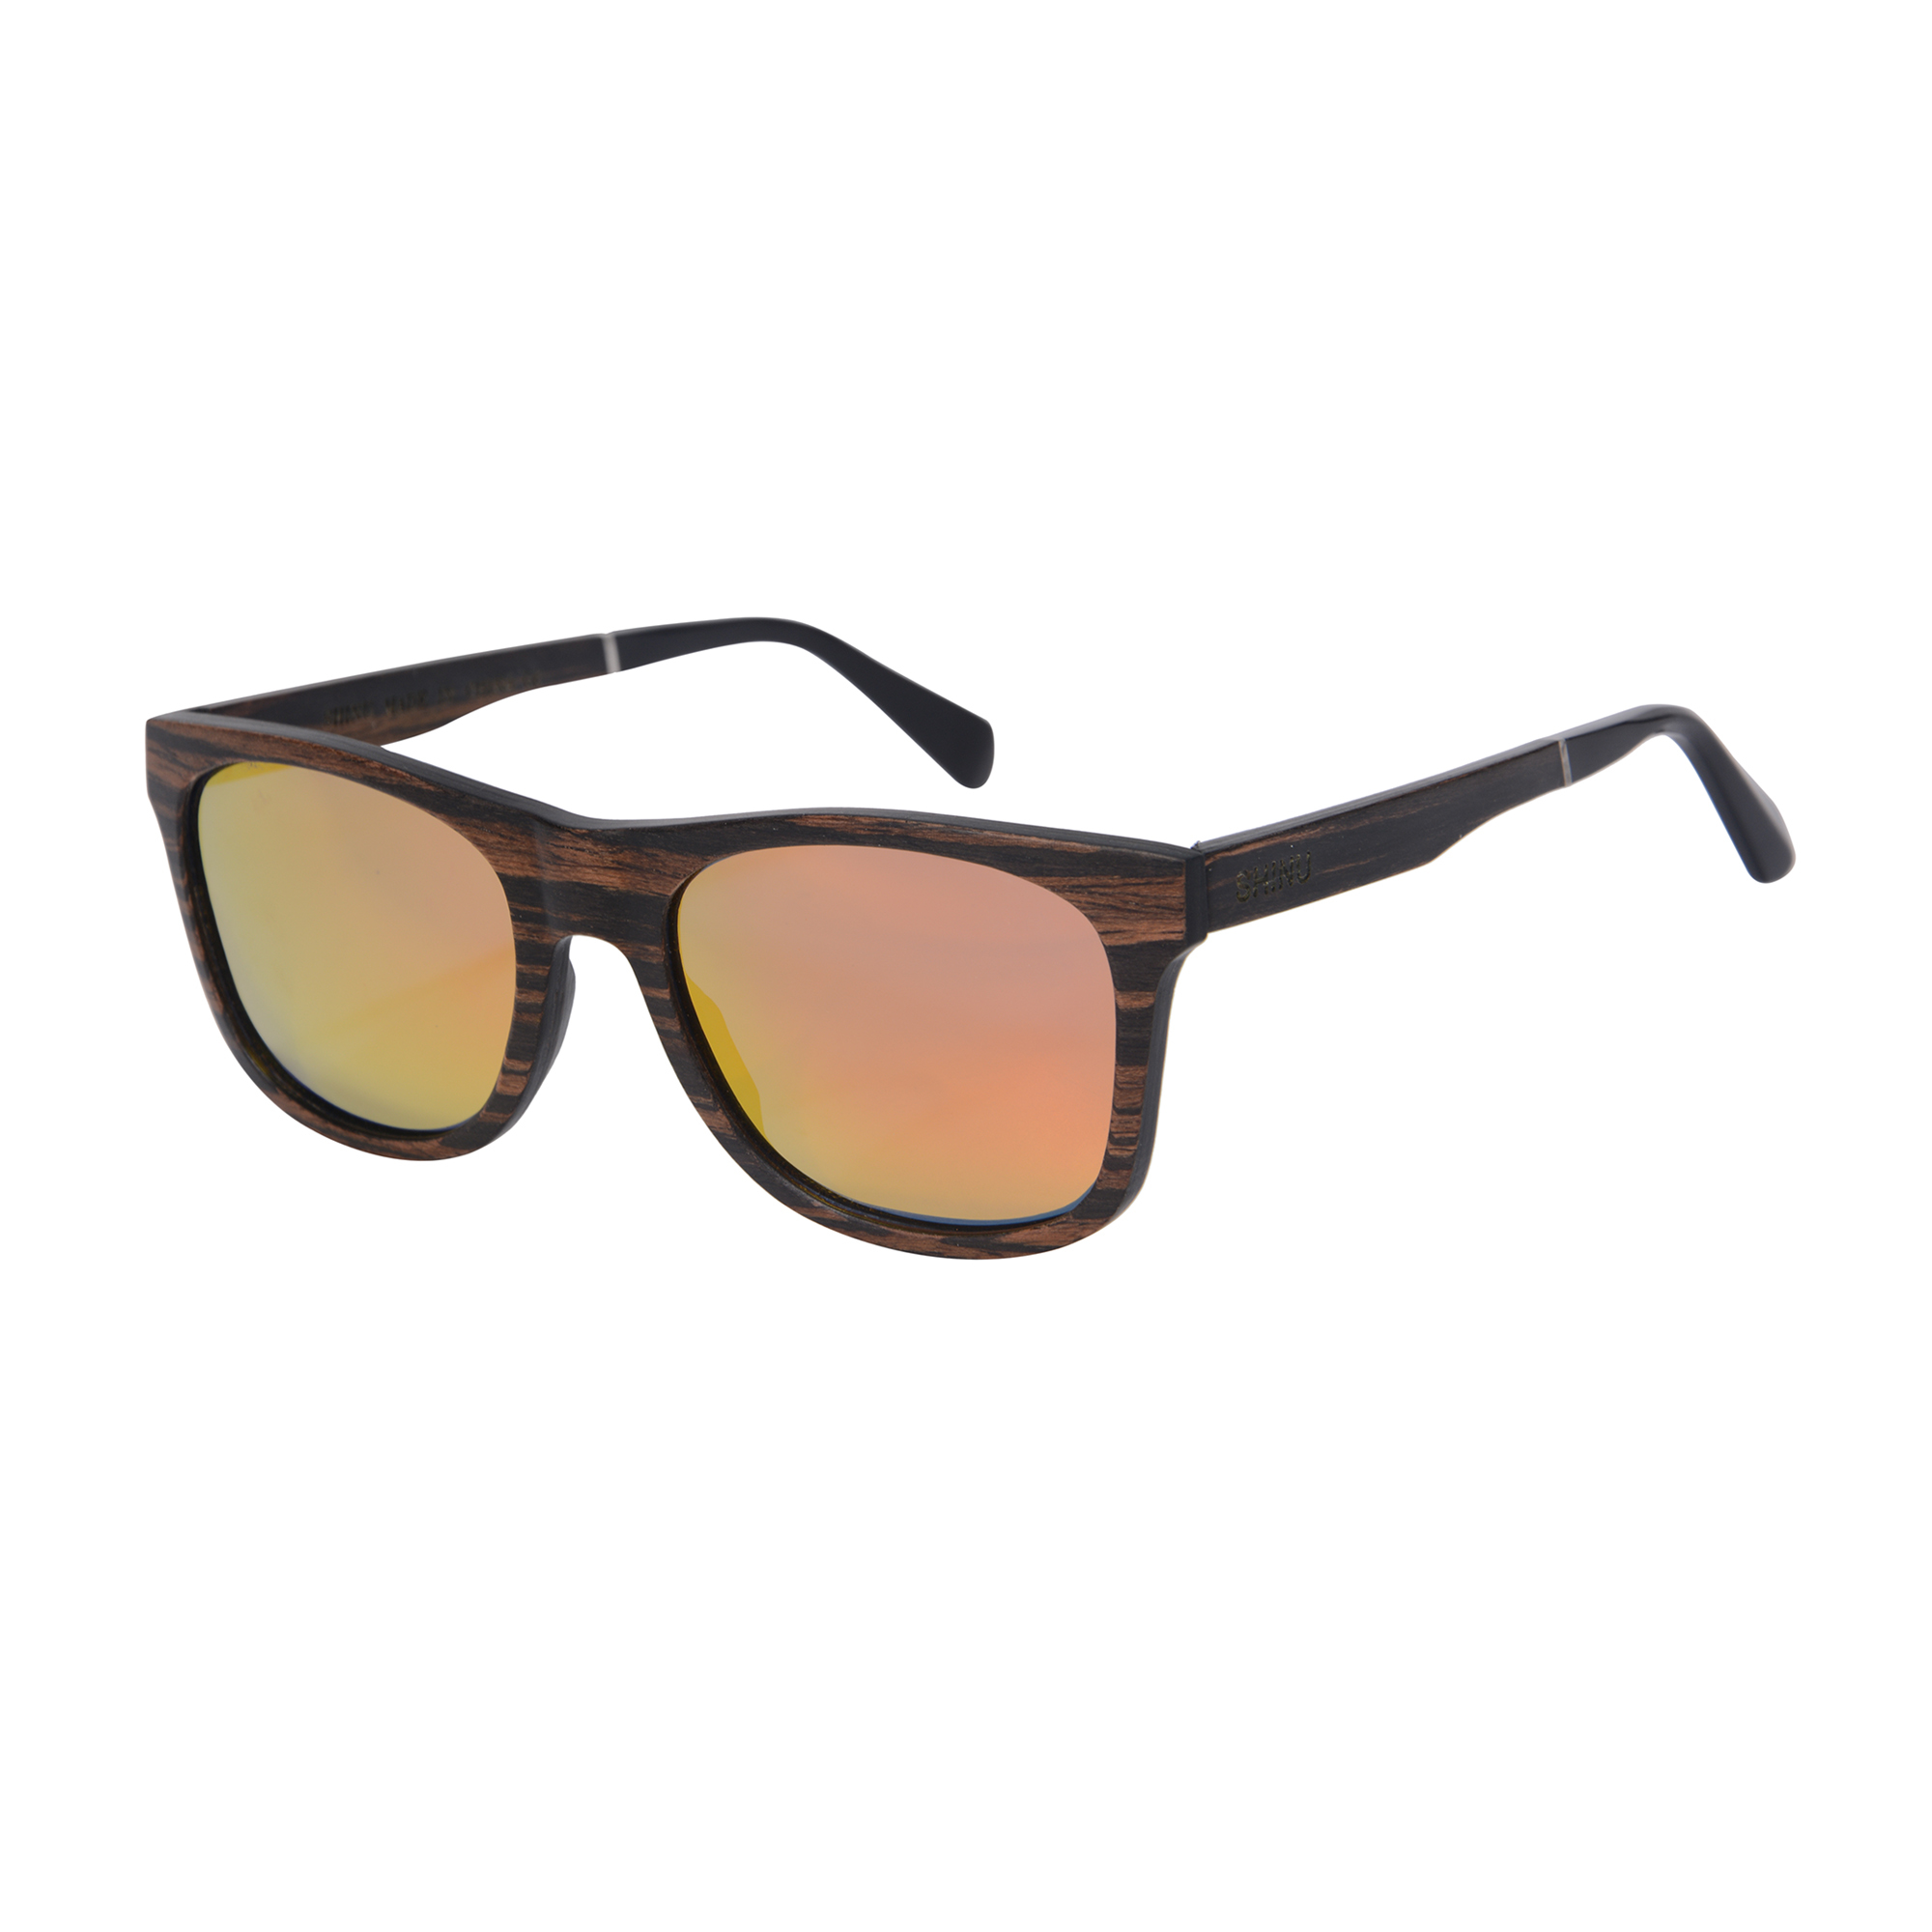 SHINU Mewah Polarized Sunglasses Kayu untuk Wanita Pria Super Retro Mirror Coating Kacamata SH73007C4-Intl